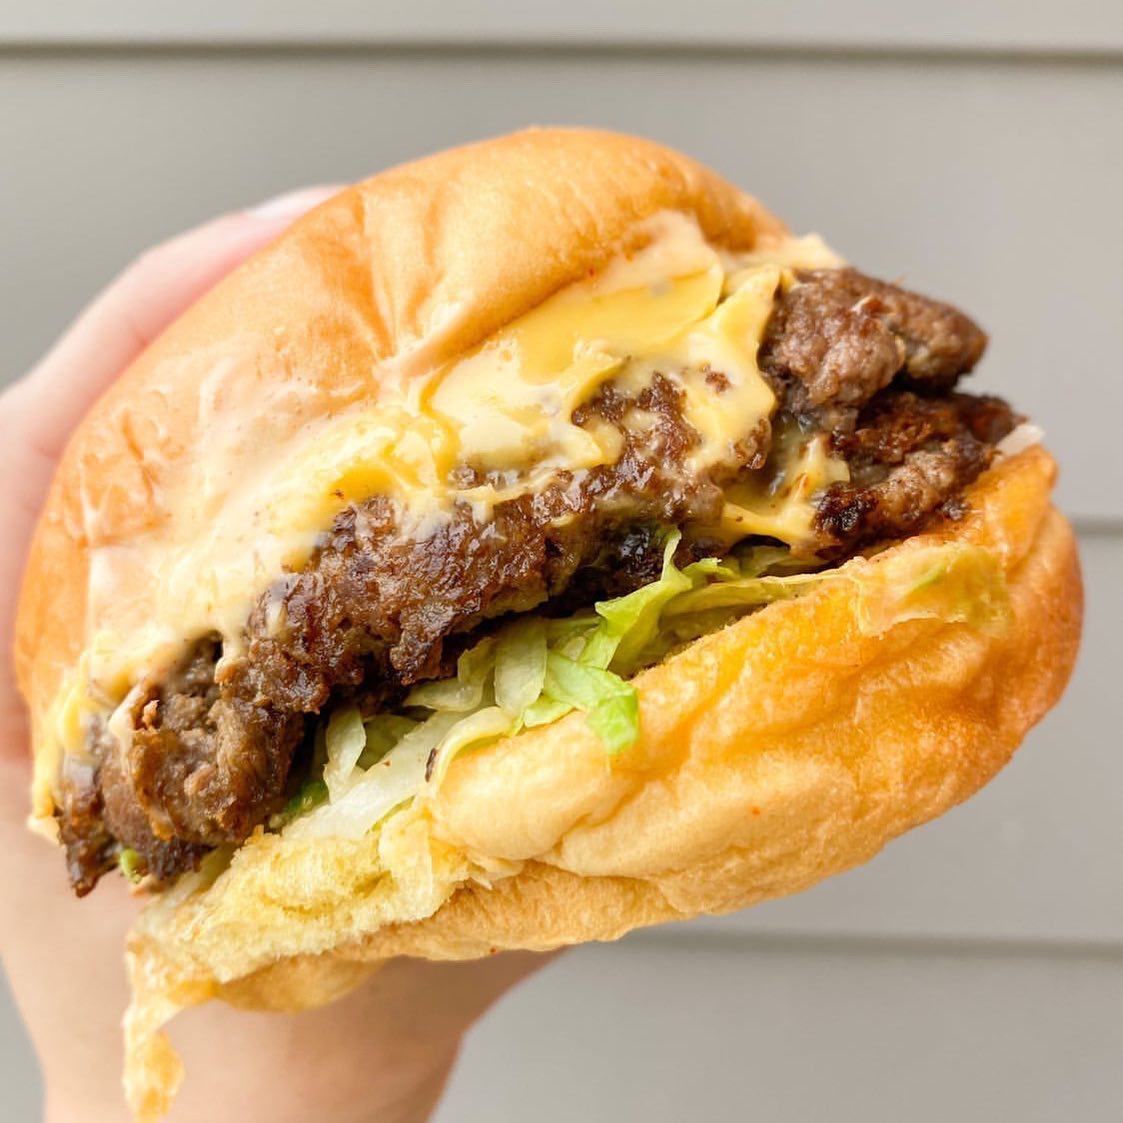 A cheeseburger from Buddy’s Burger